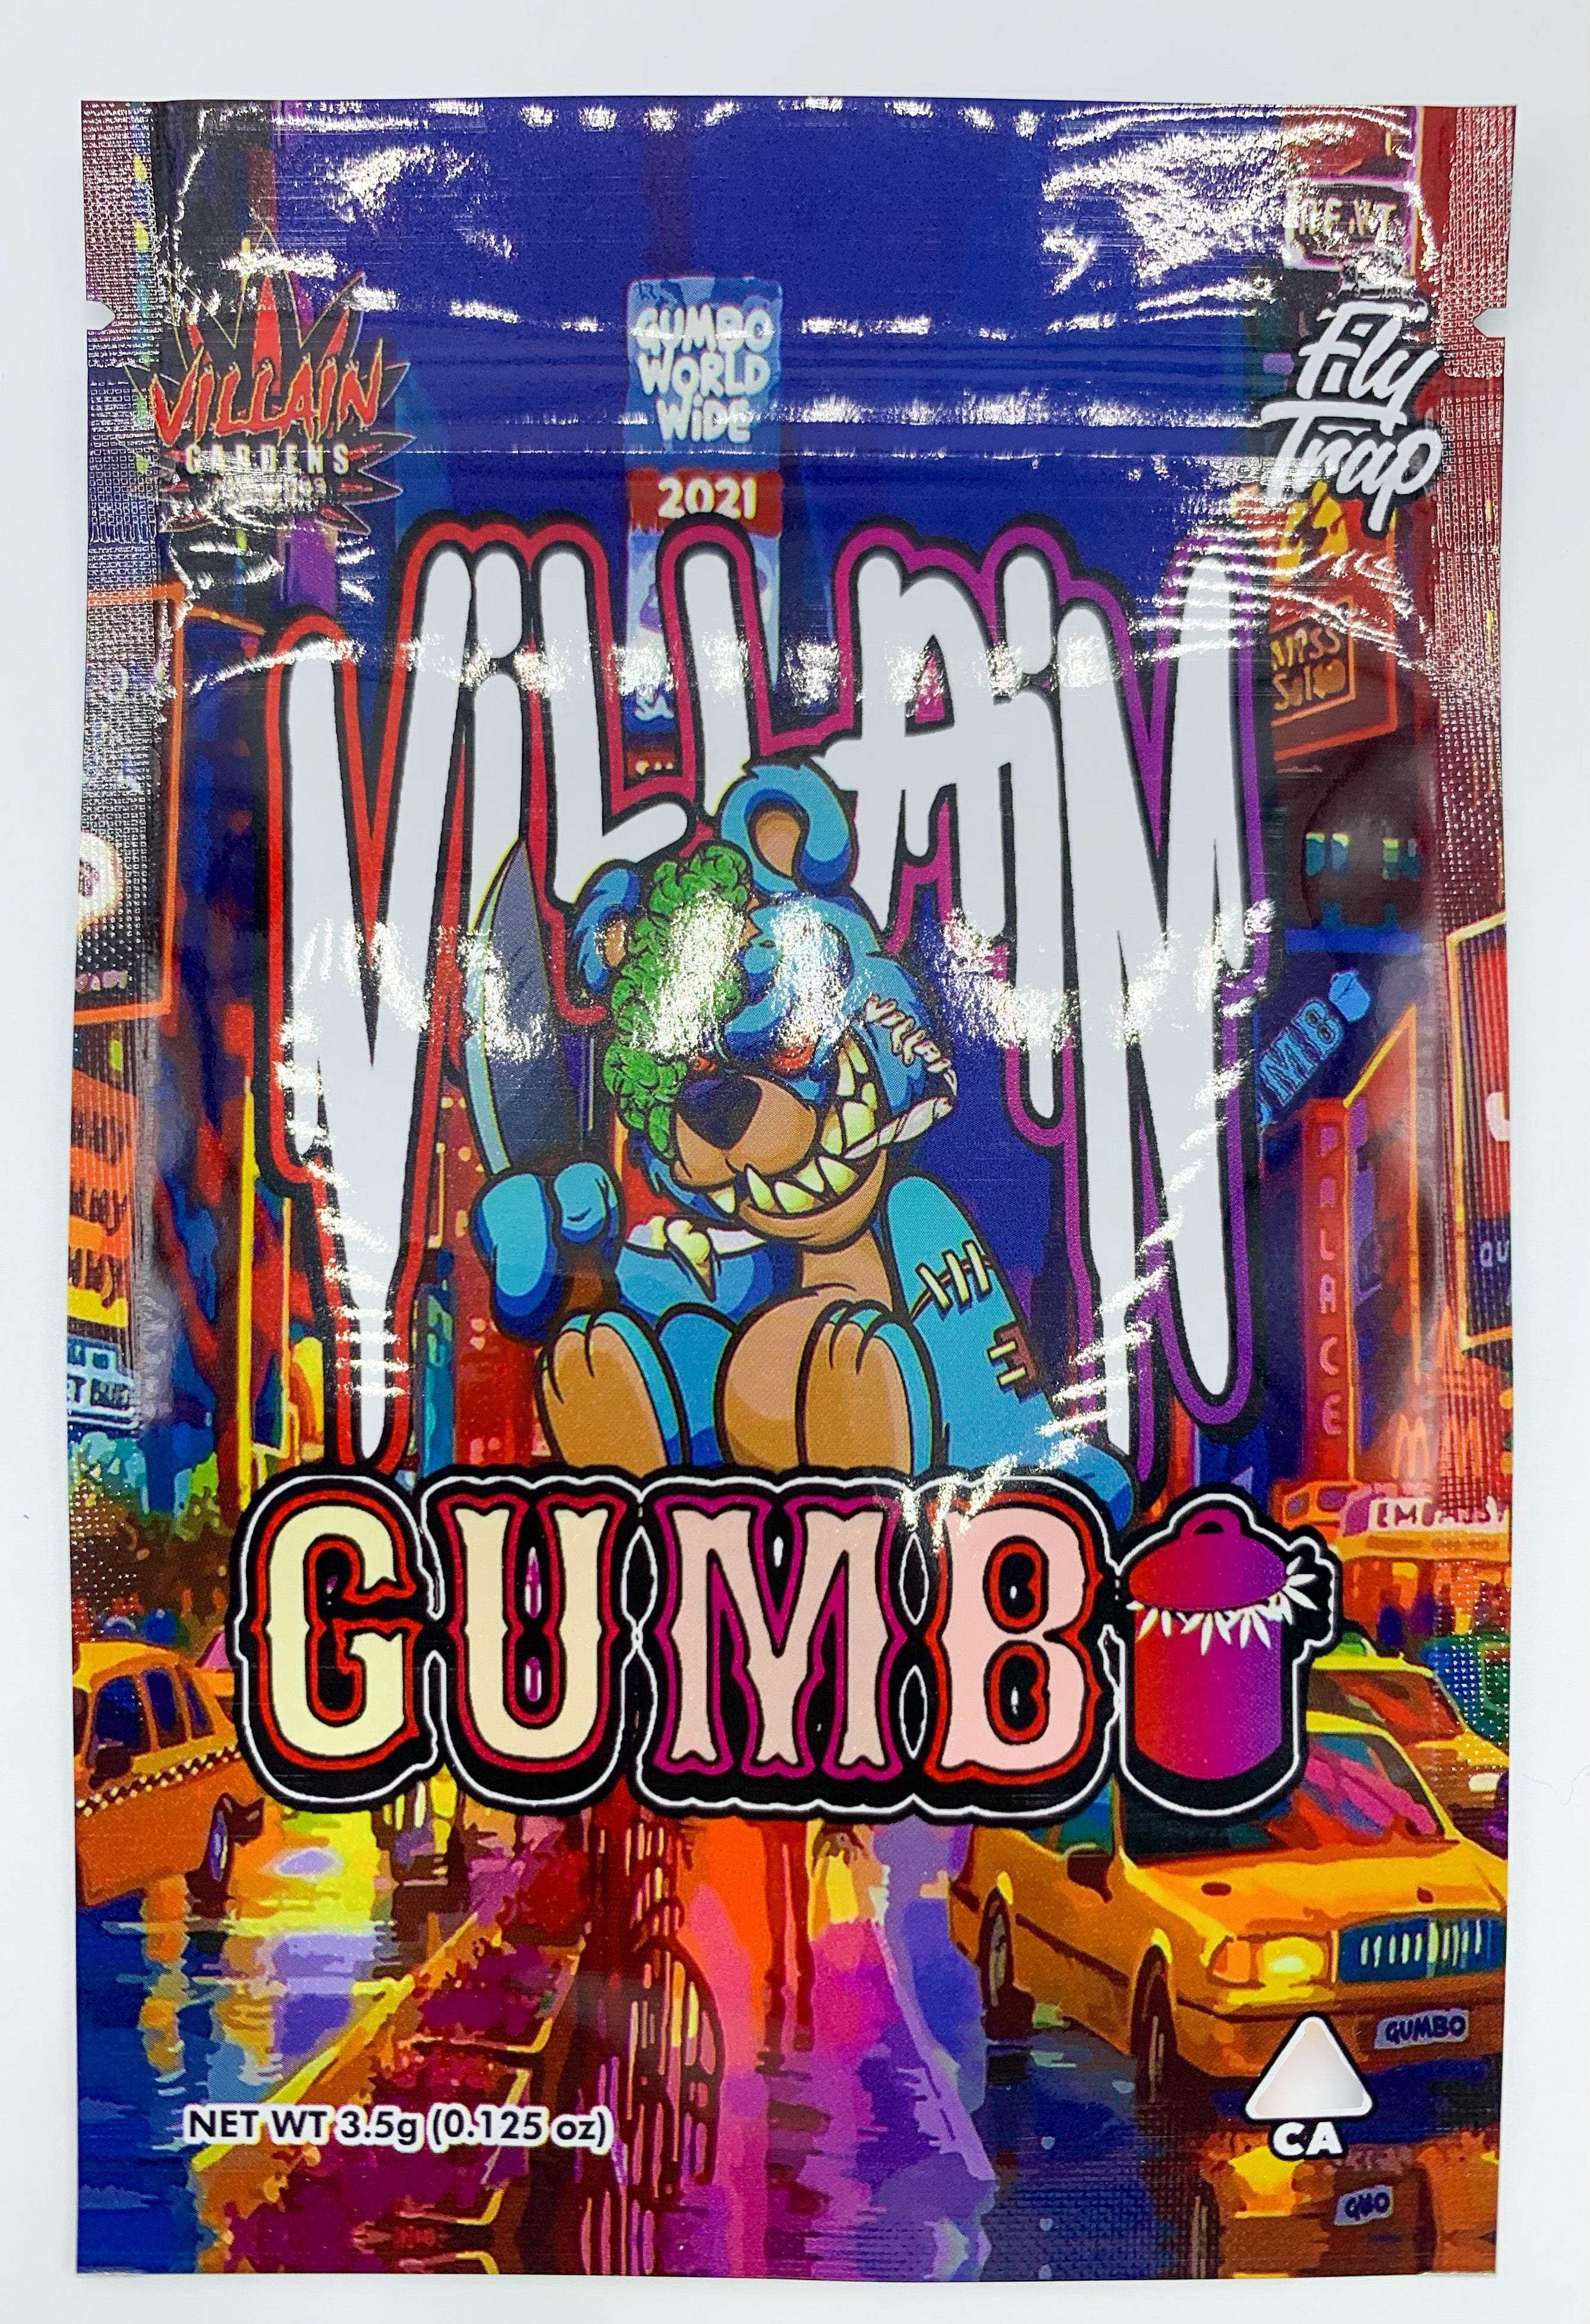 Fly Trap Villain Gumbo 3.5G Mylar bags